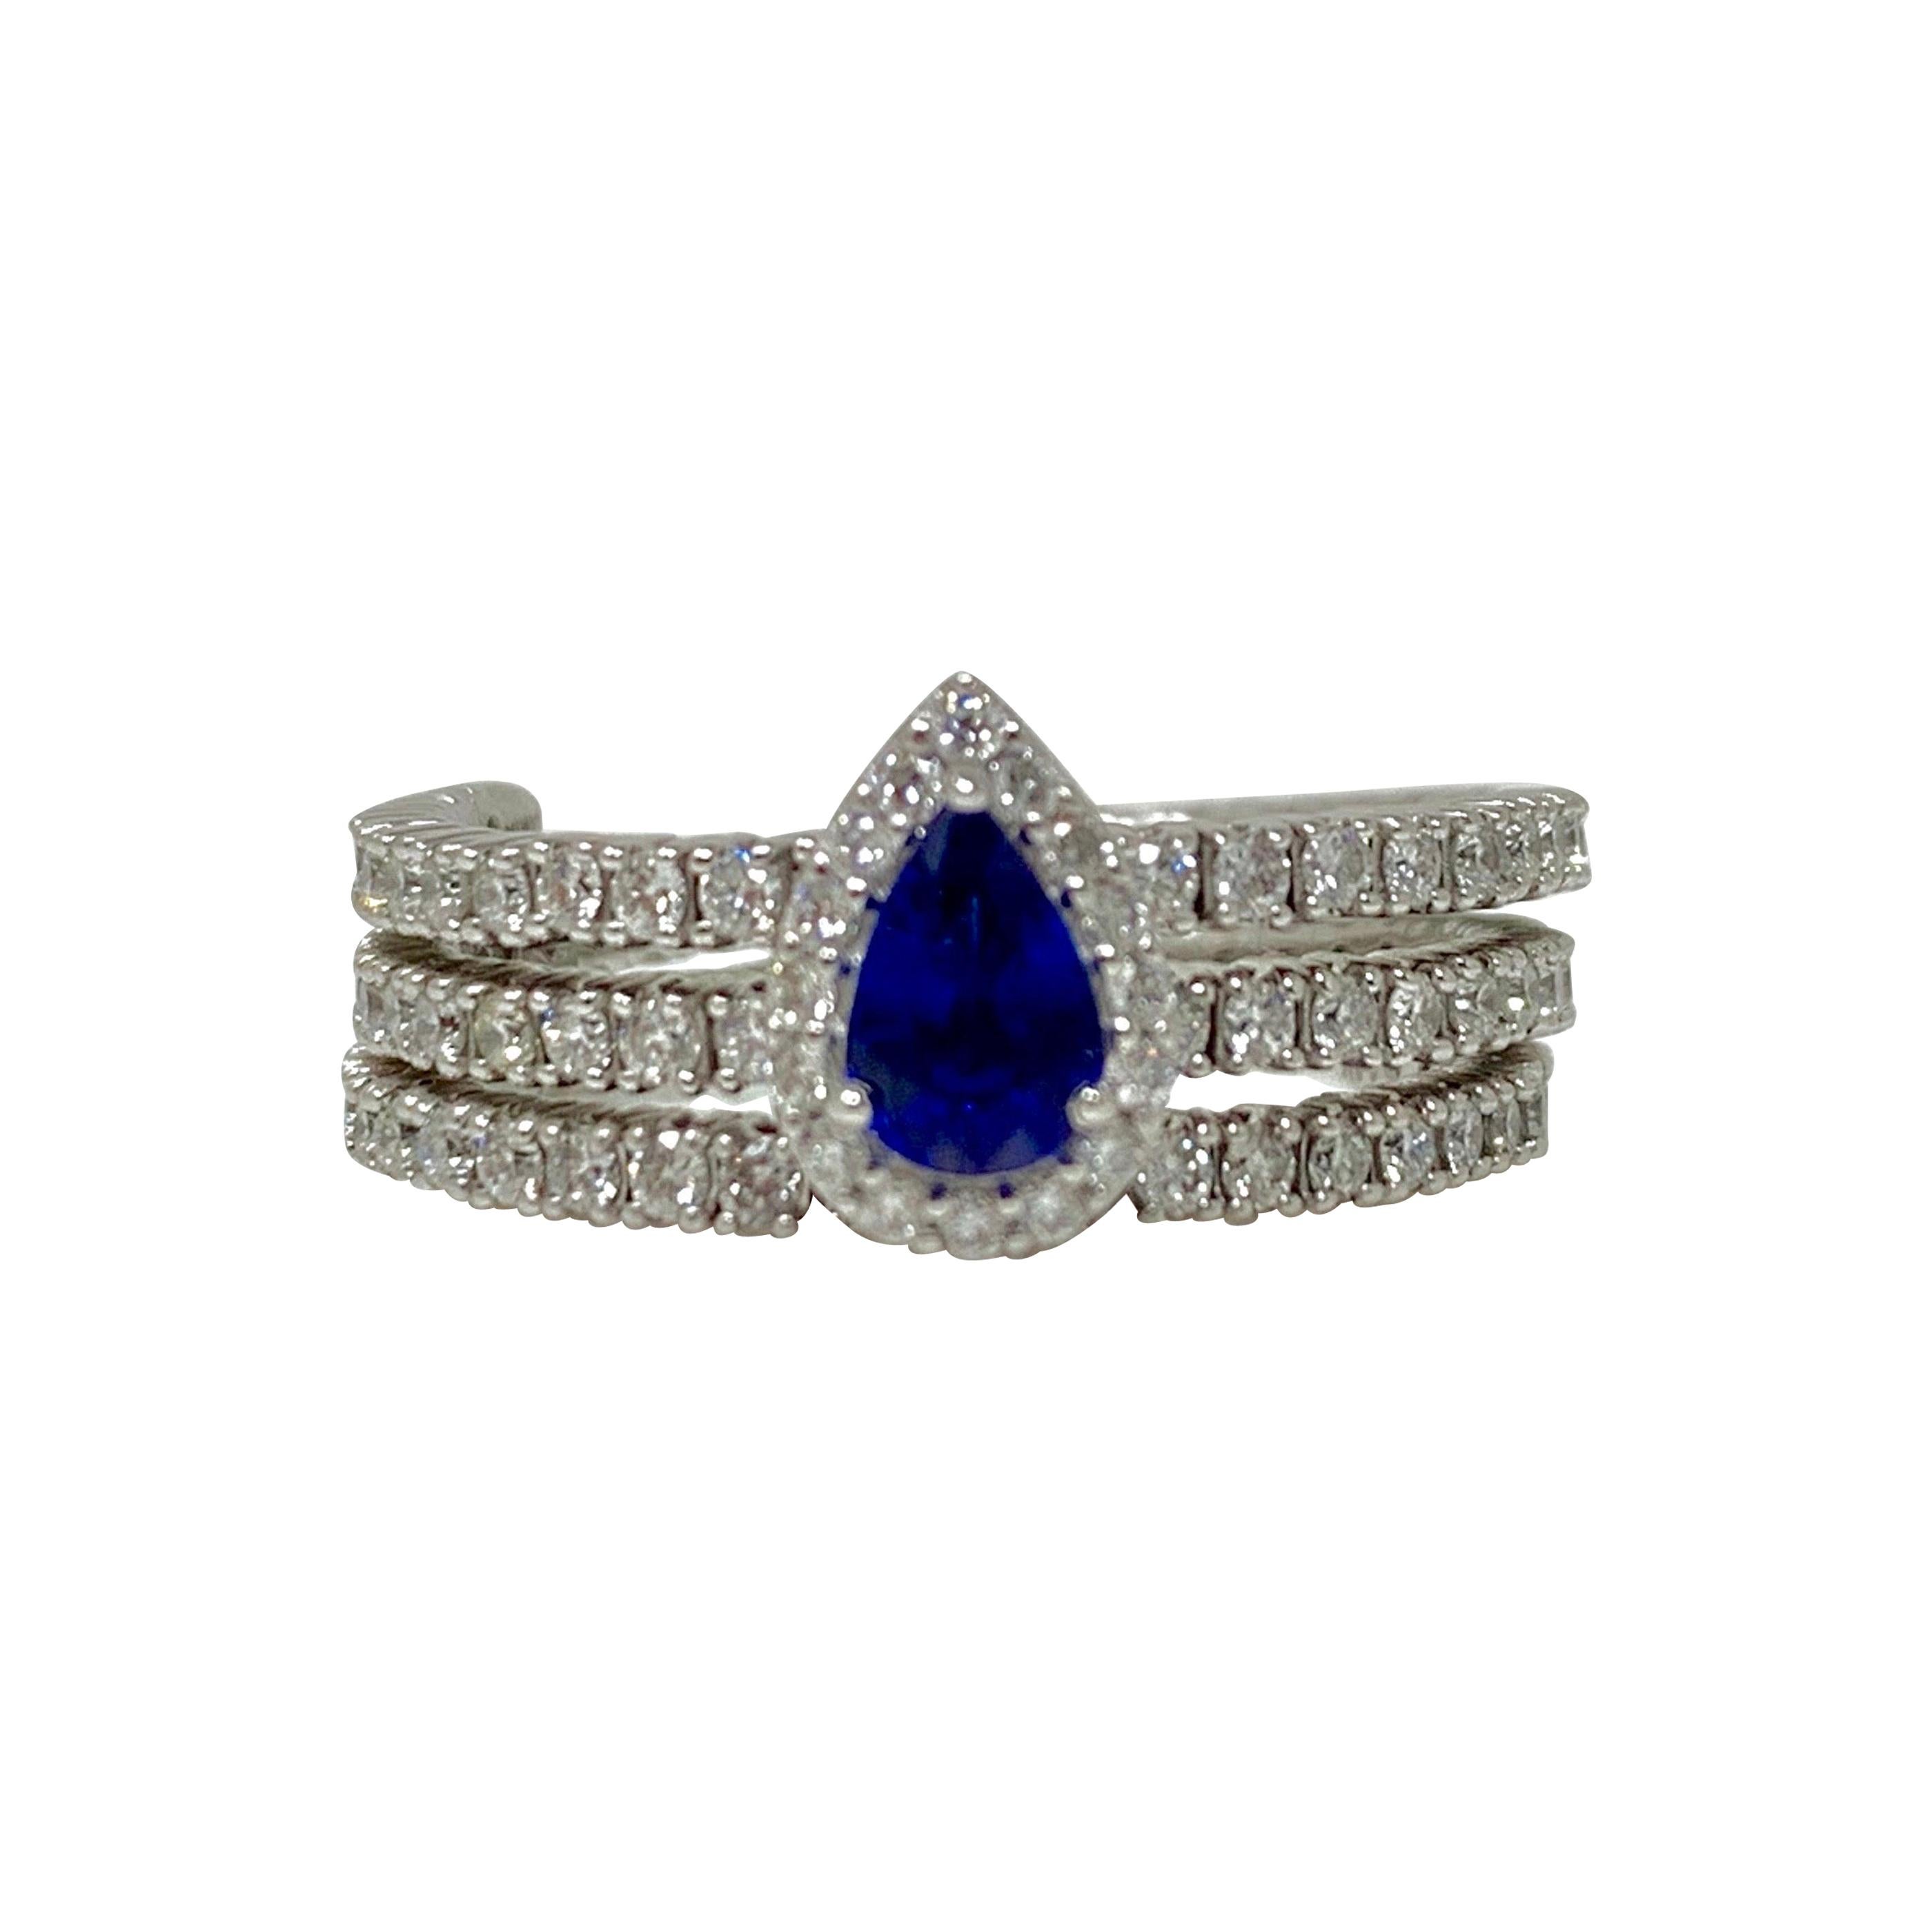 Blue Sapphire and Diamond Flexible Ring in 14 Karat White Gold.